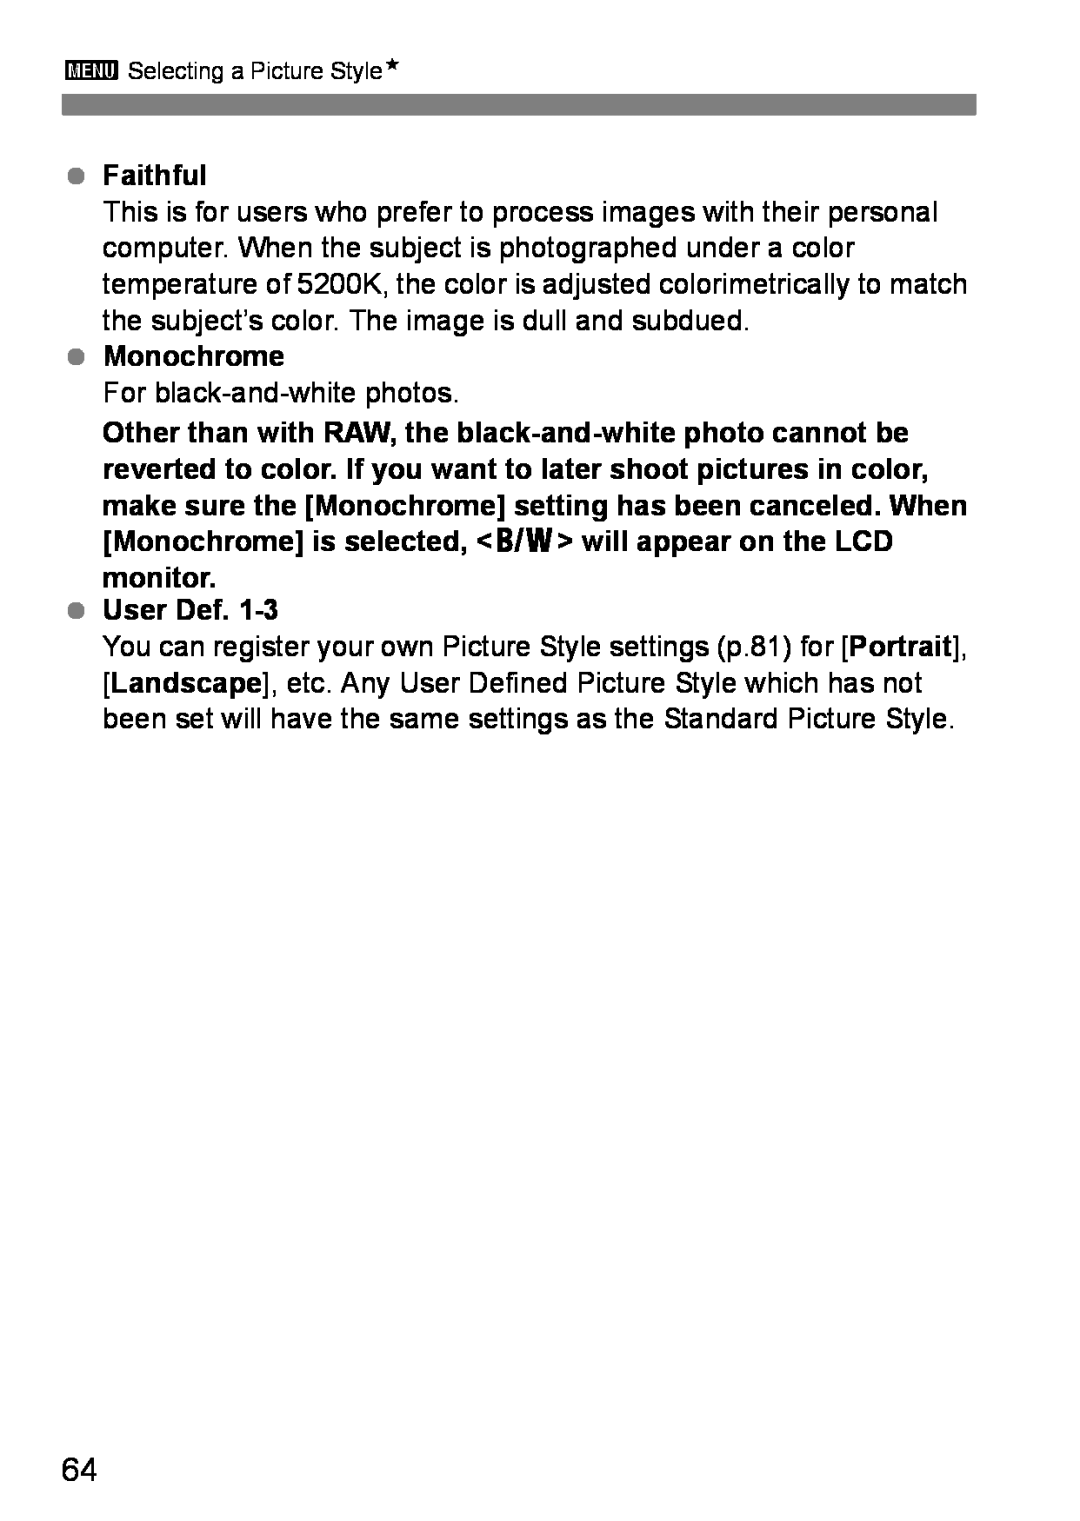 Canon EOS DIGITAL REBEL XTI instruction manual Faithful, Monochrome, User Def 